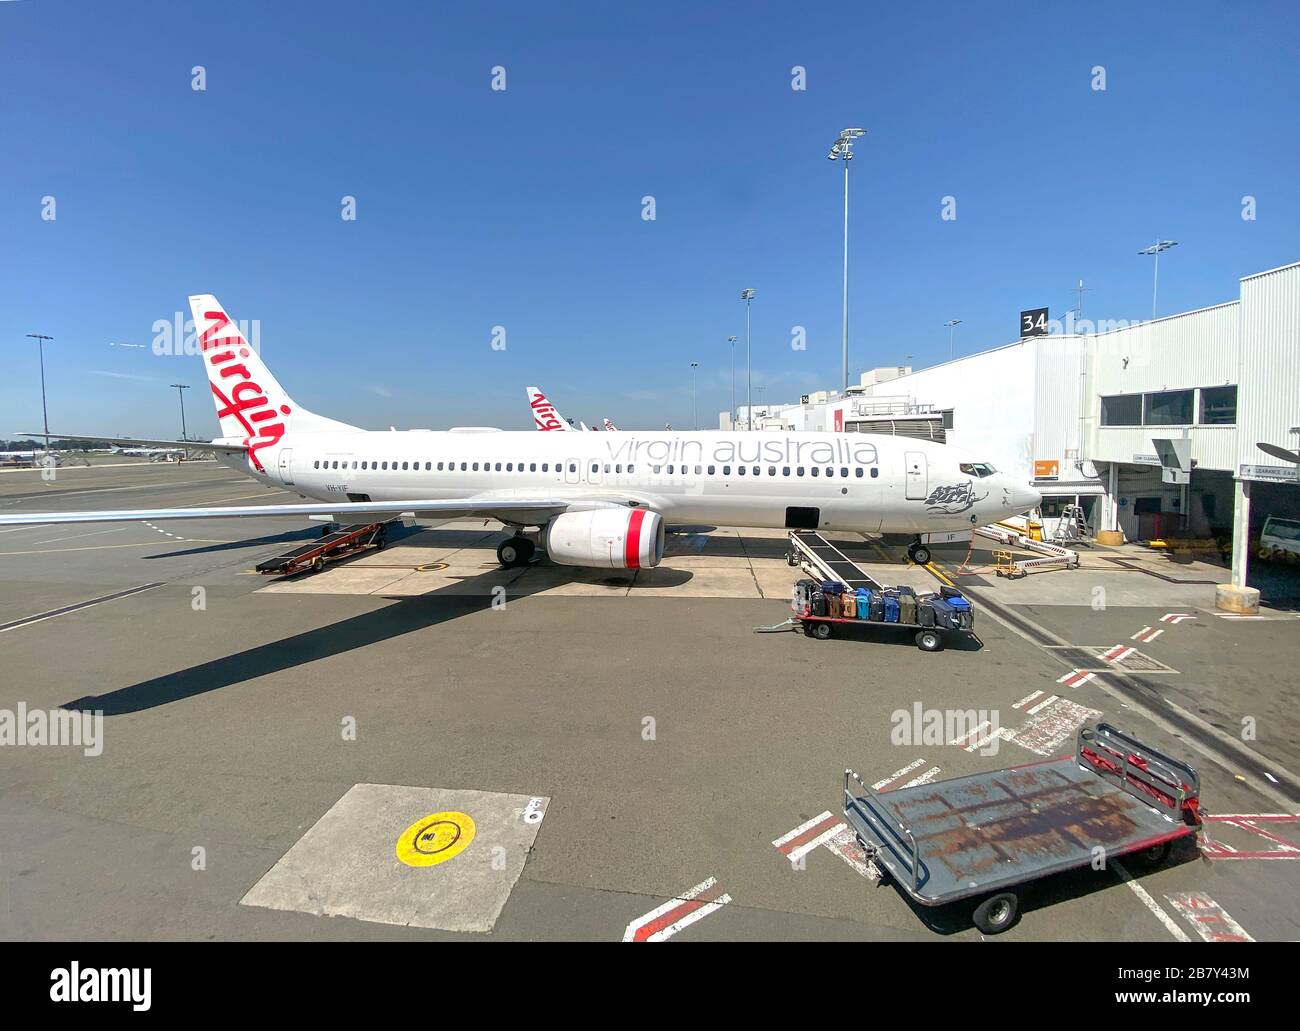 Virgin Australia Boeing 737-8FE aircraft at gate, Melbourne Airport, Tullamarine, Melbourne, Victoria, Australia Stock Photo